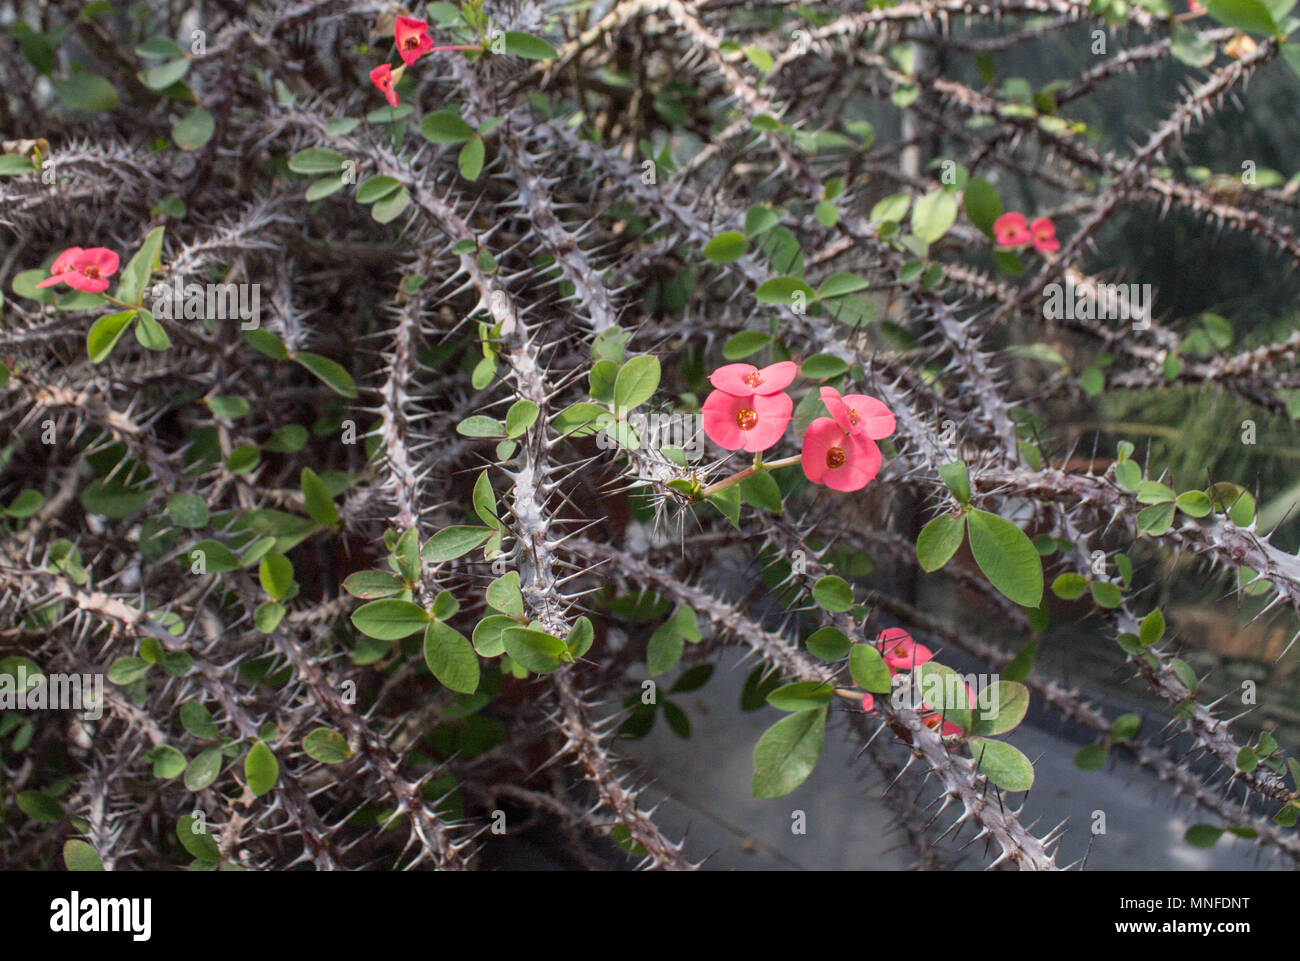 Thorny Bush With Pink Flowers Stock Photo Alamy